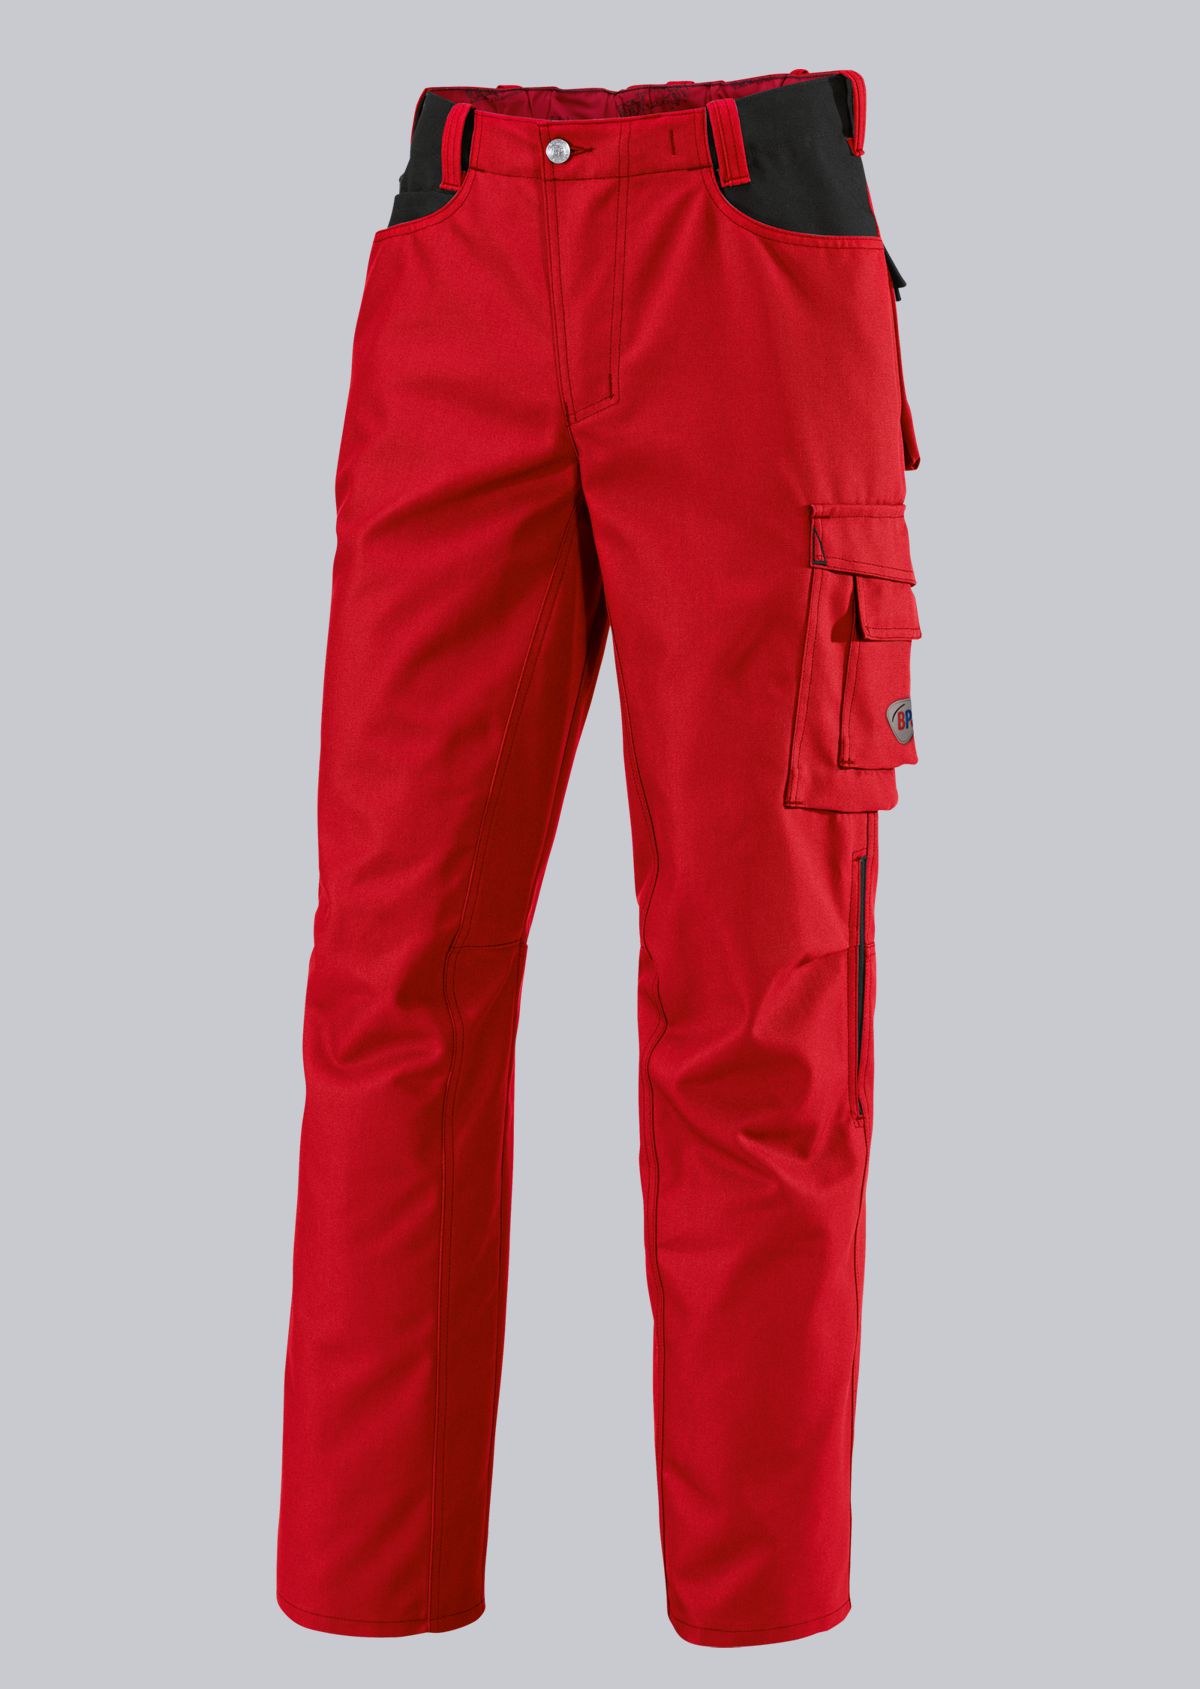 BP® Durable work trousers